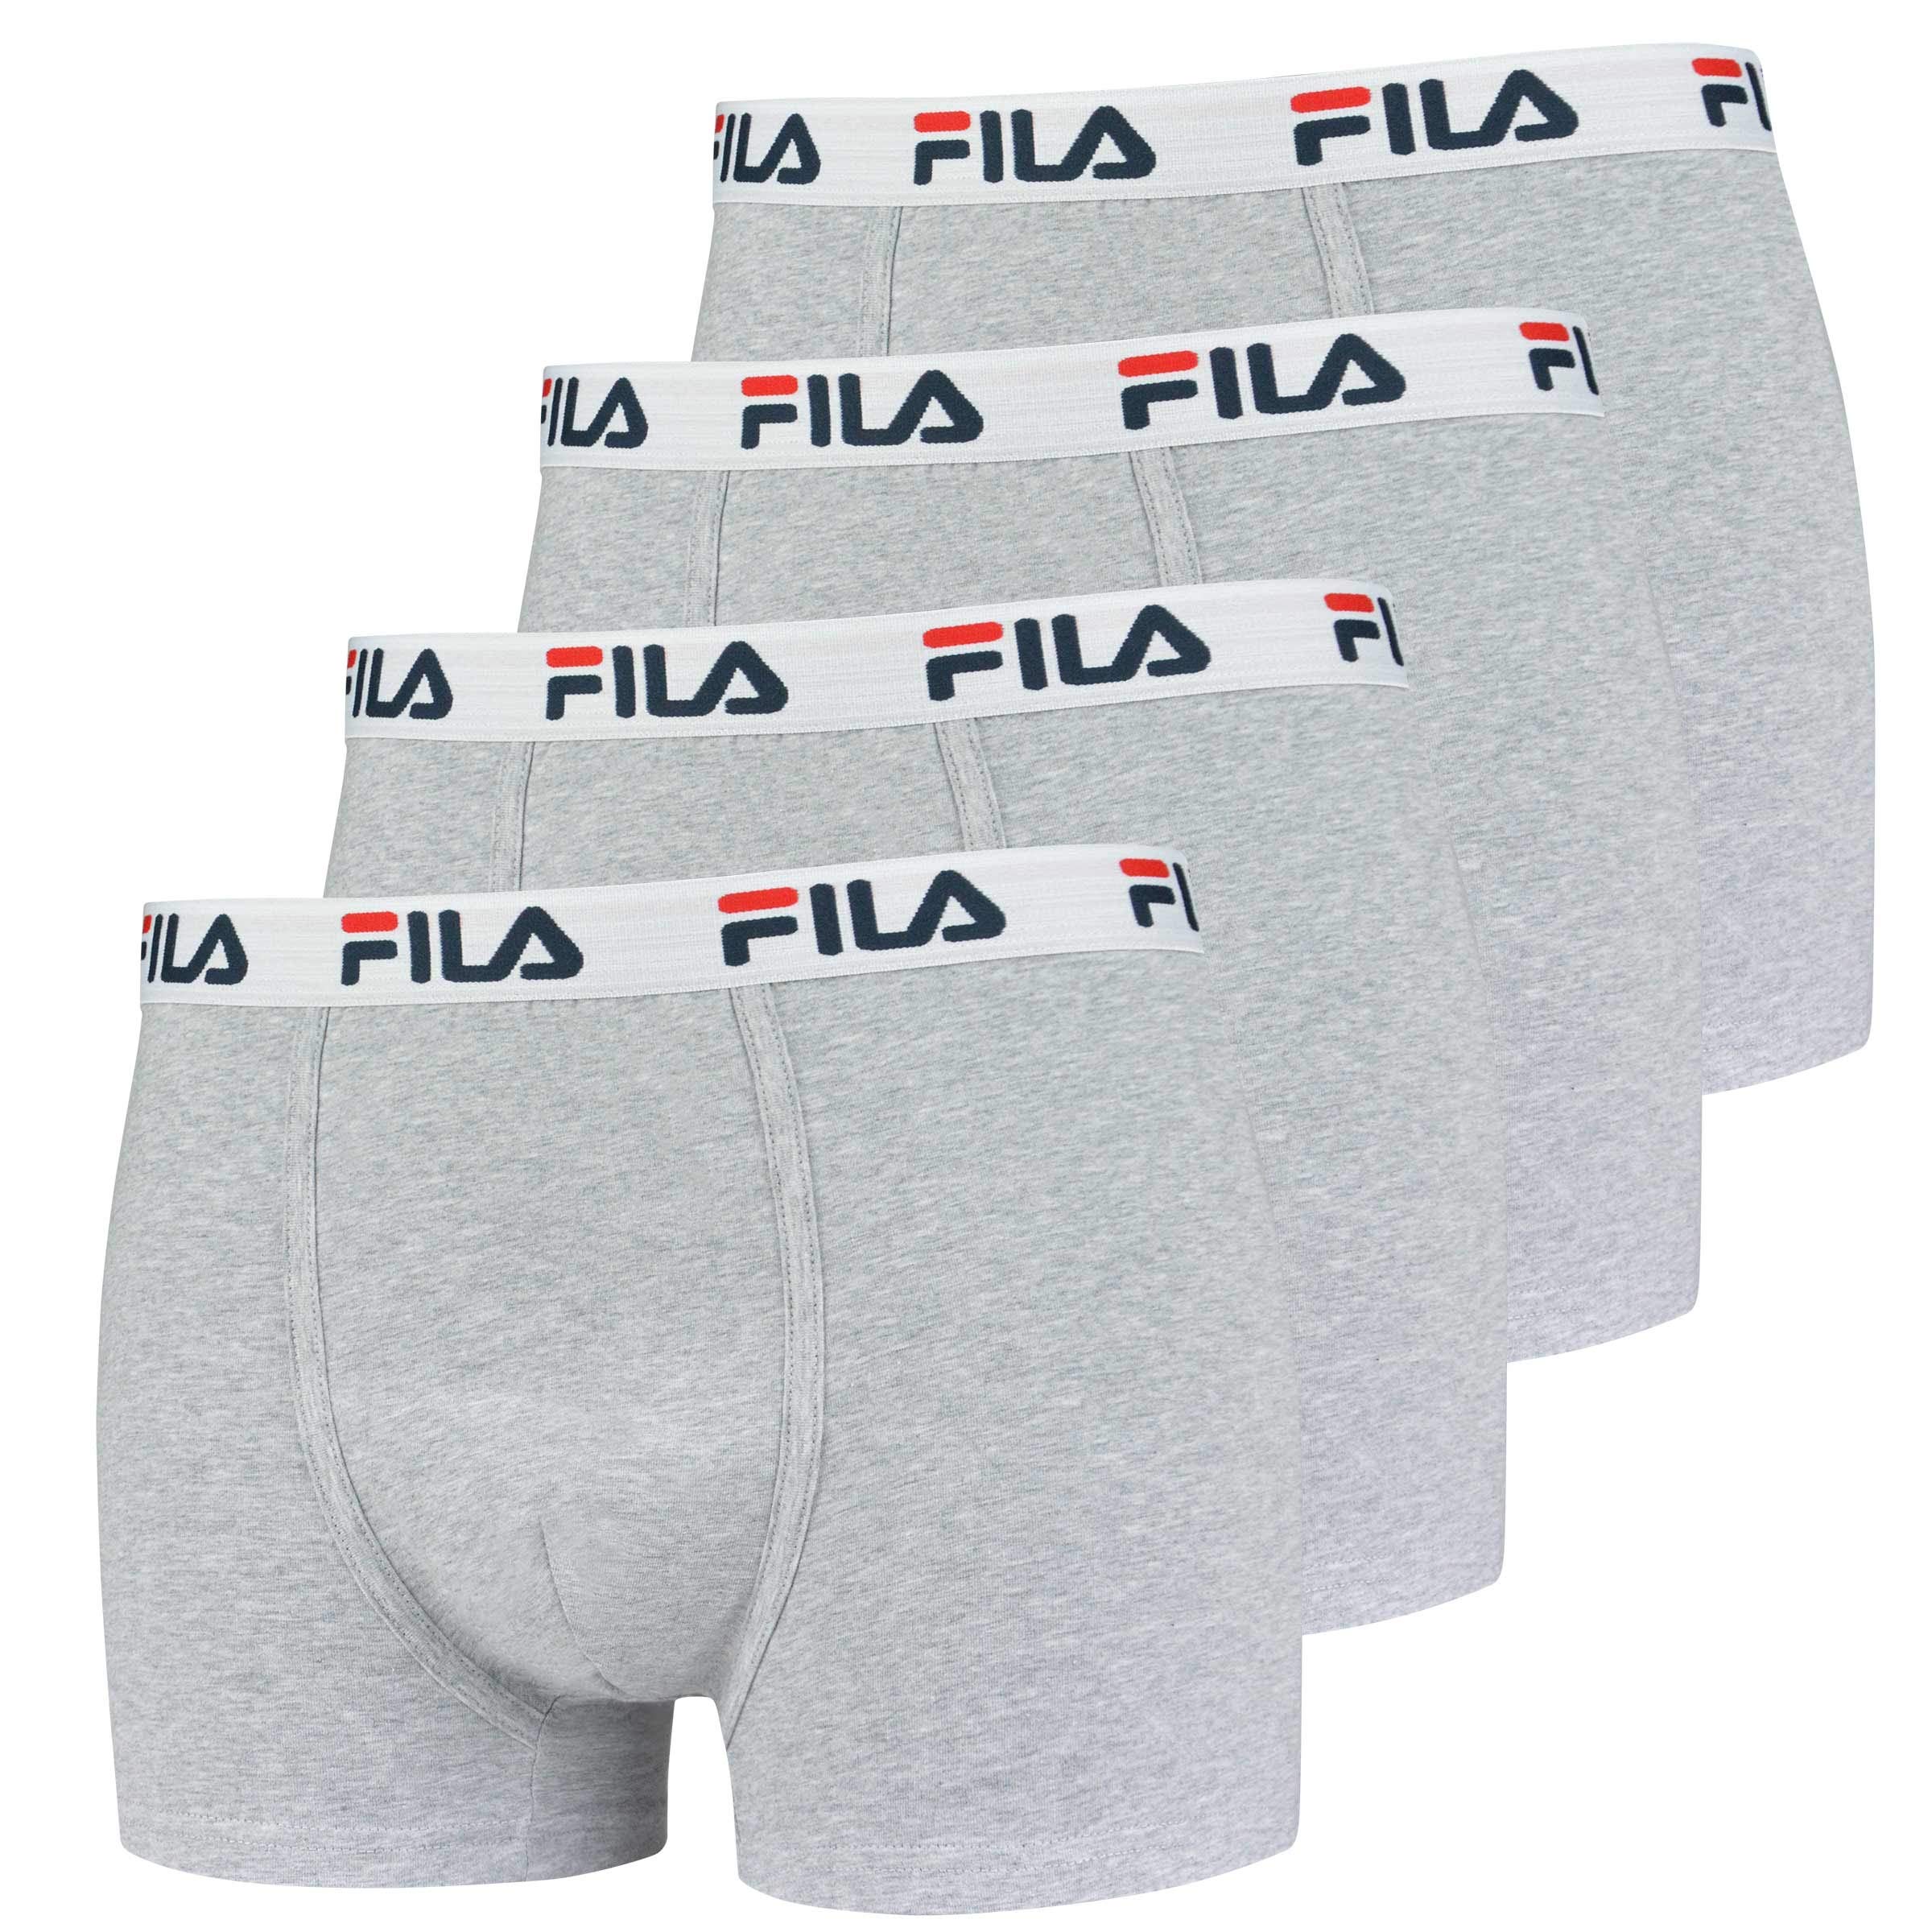 FILA 4er Vorteilspack Herren Boxershorts - Logo Pants - Einfarbig - Bequem - Stretch - viele Farben (Grau, M - 4er Pack)